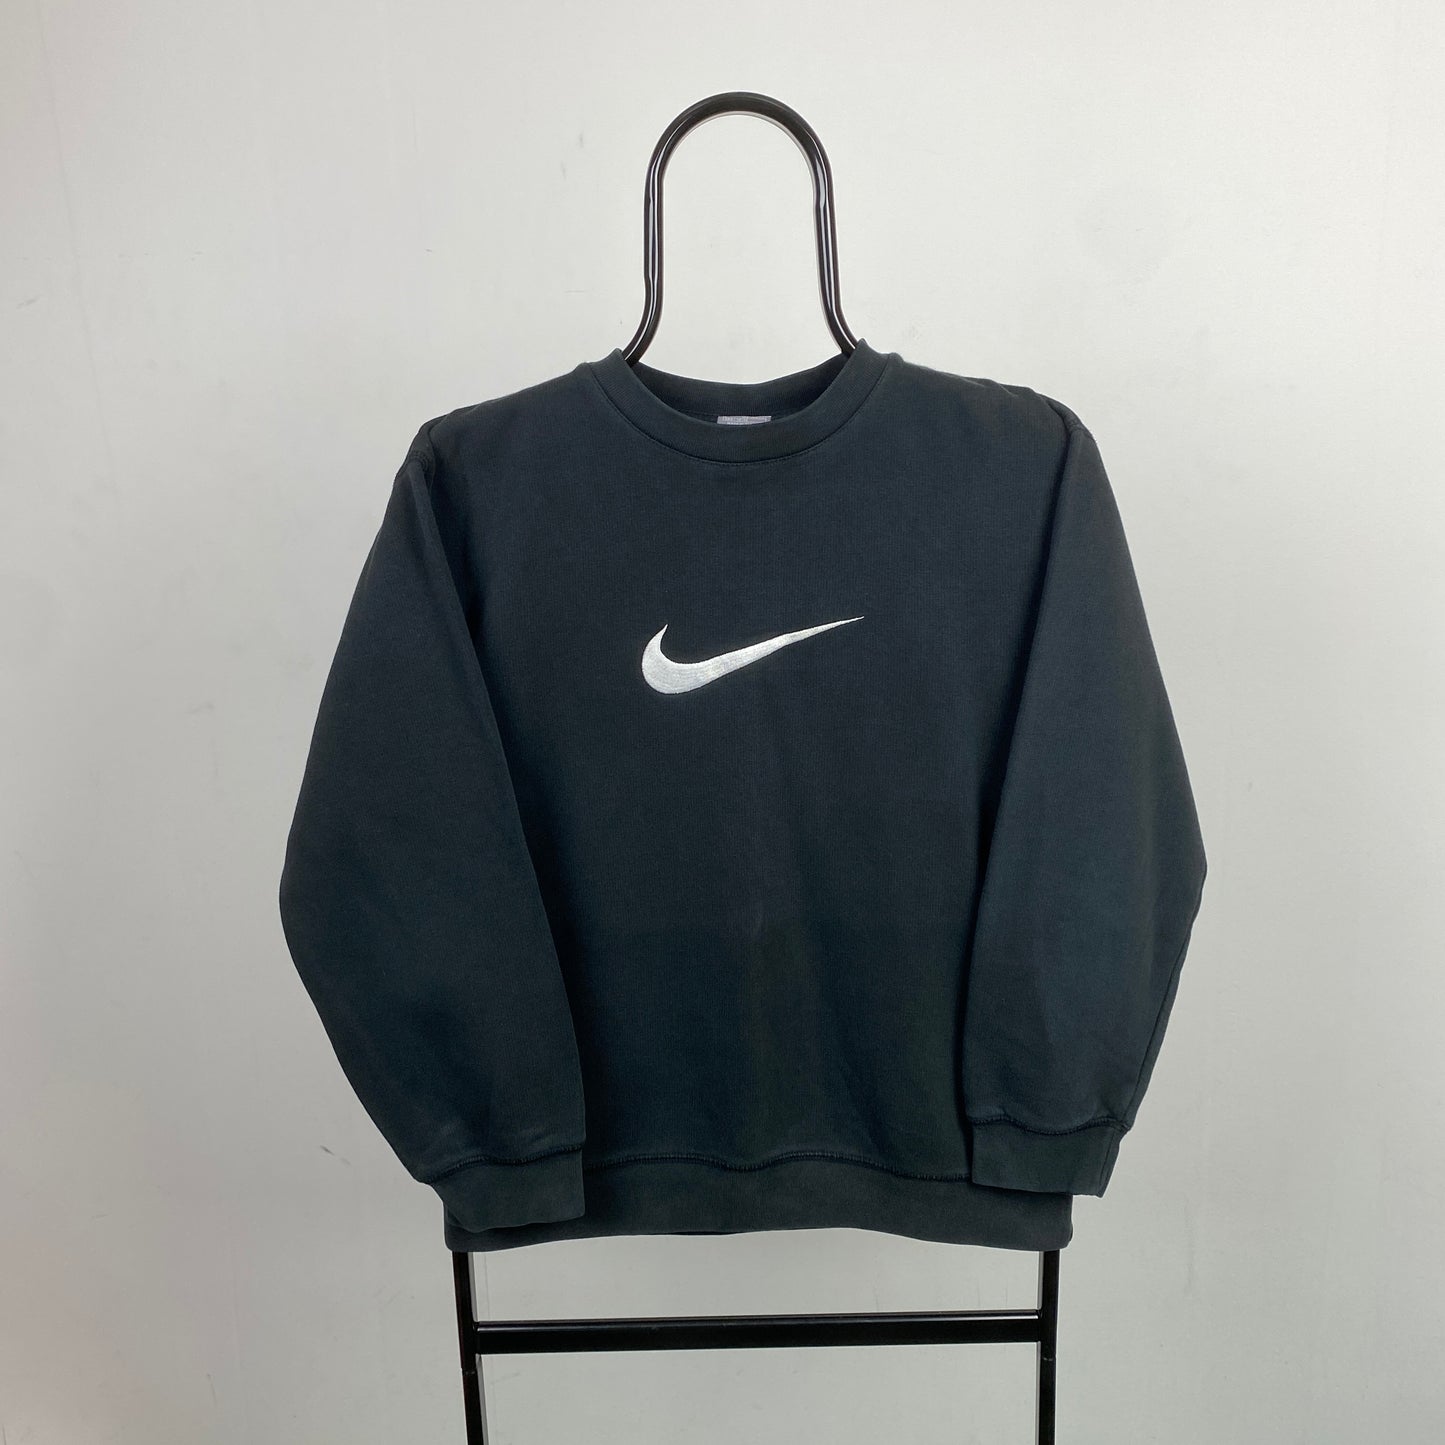 00s Nike Sweatshirt Black XS